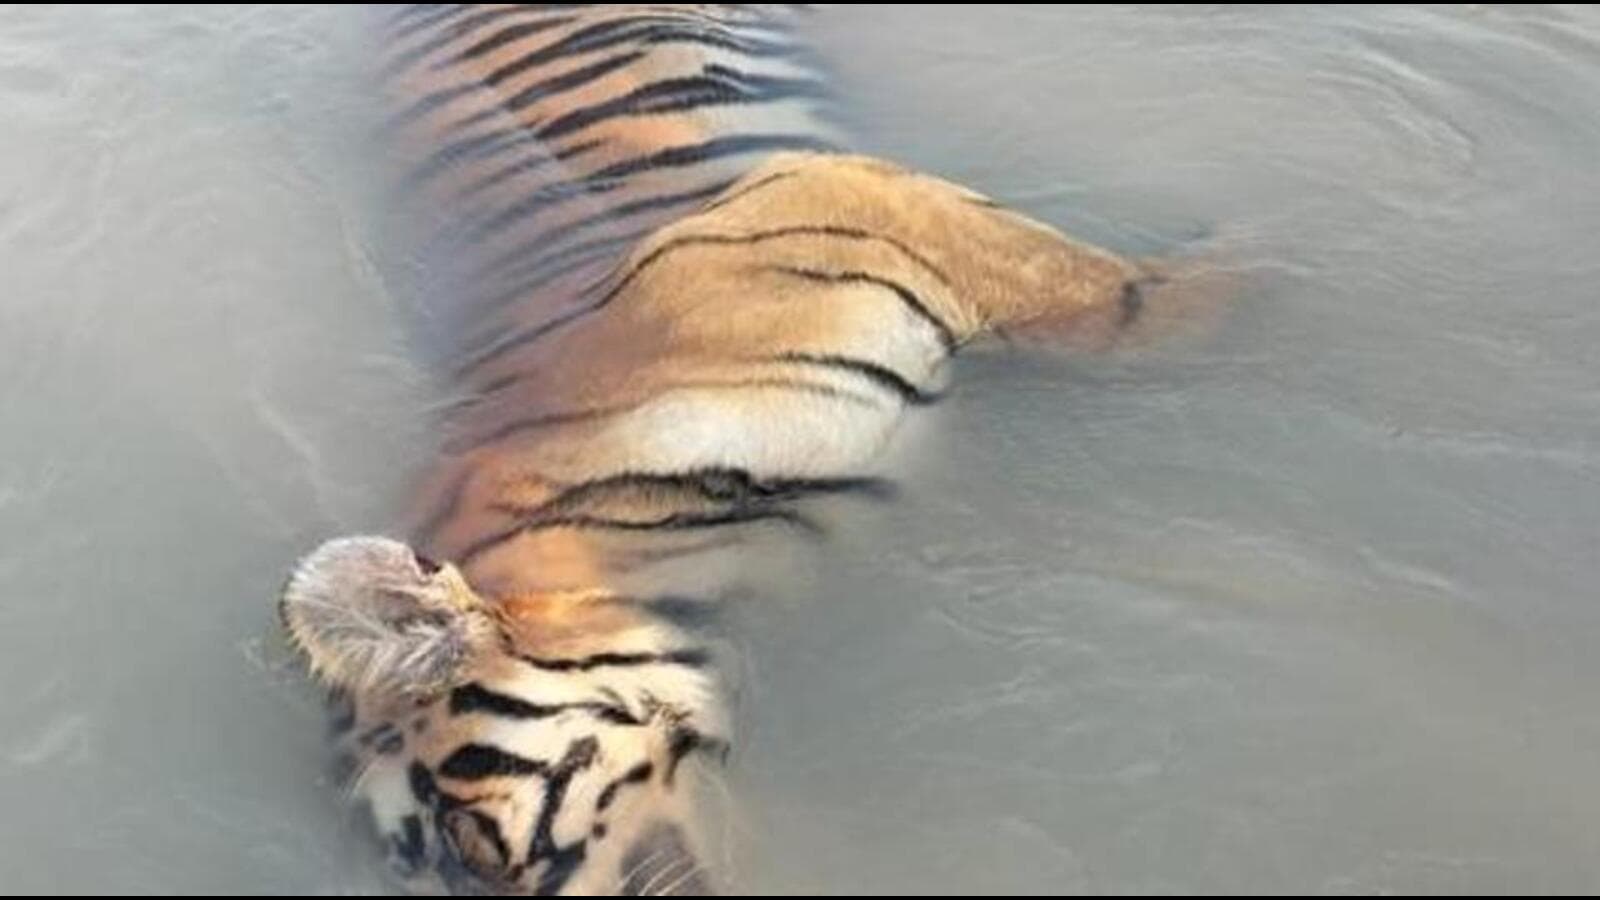 Idukki:Tiger's carcass found in lake | Latest News India - Hindustan Times